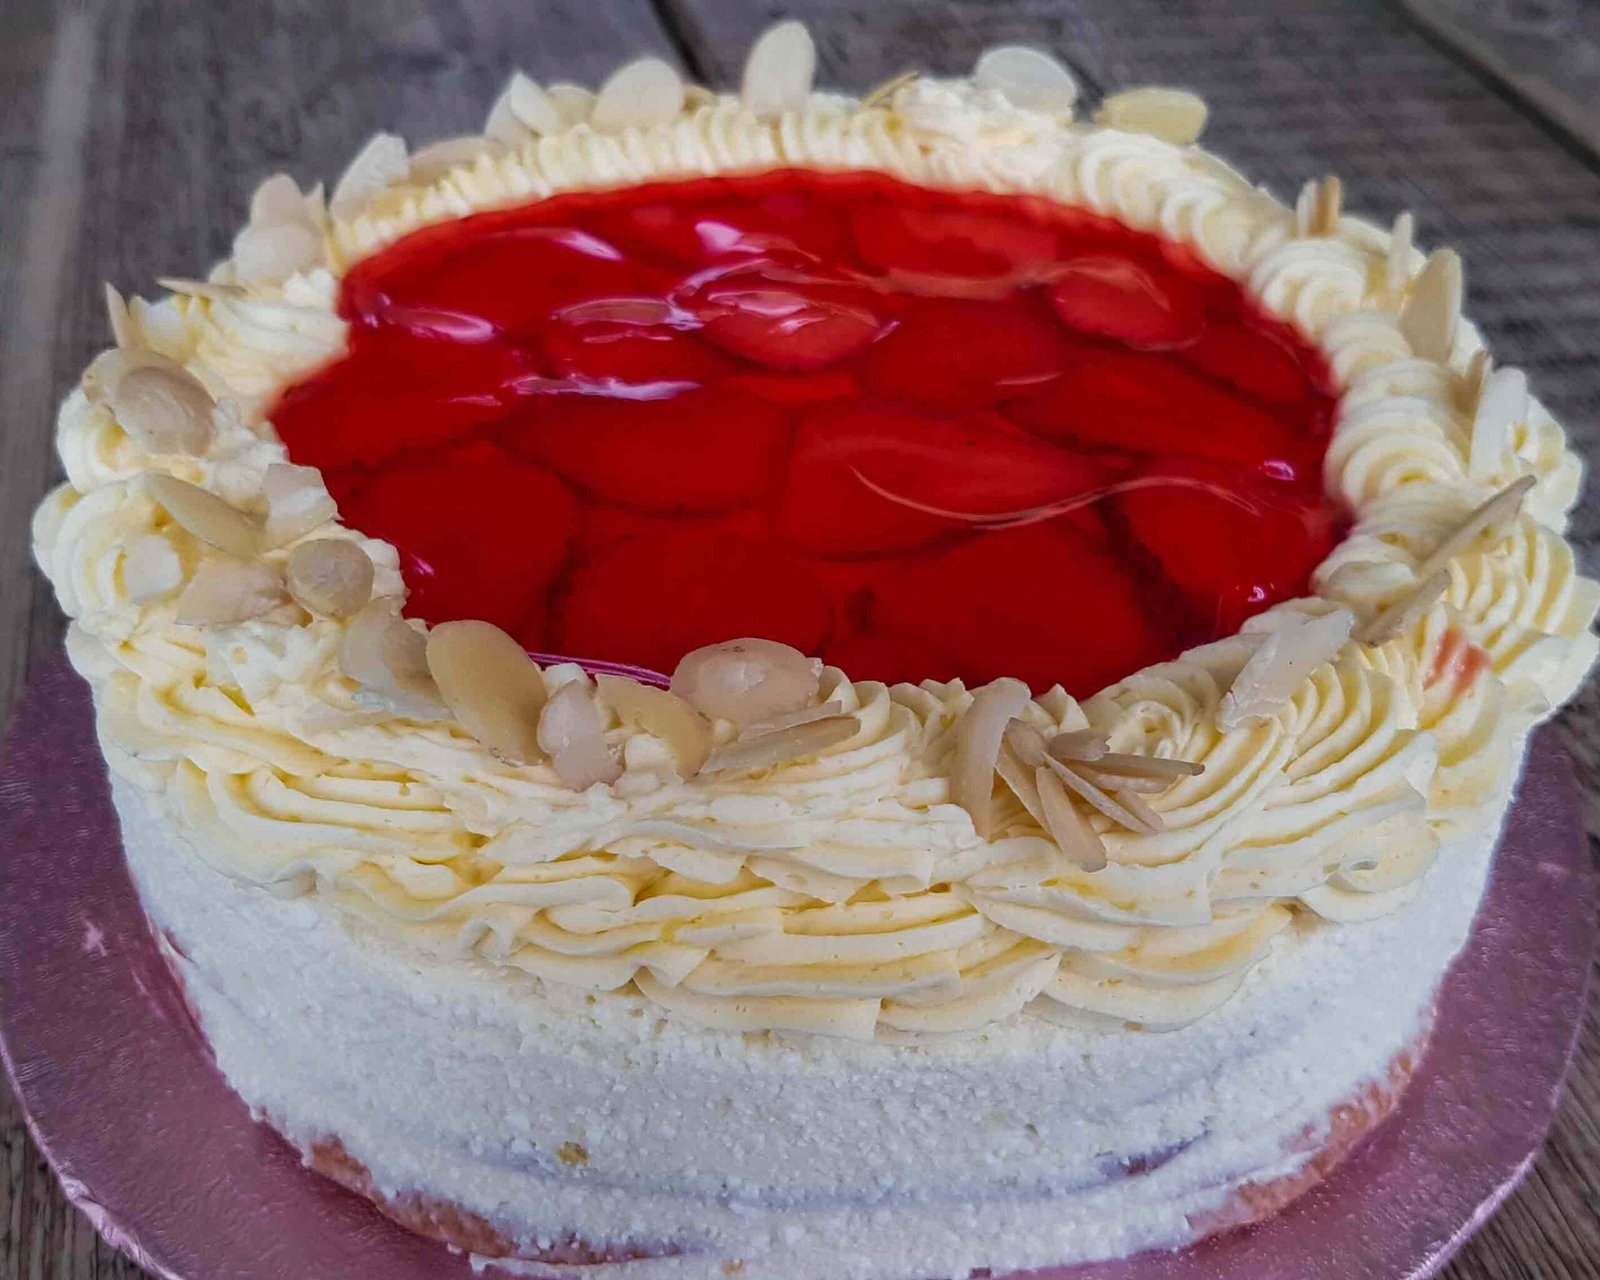 Strawberry cottagecheese cake